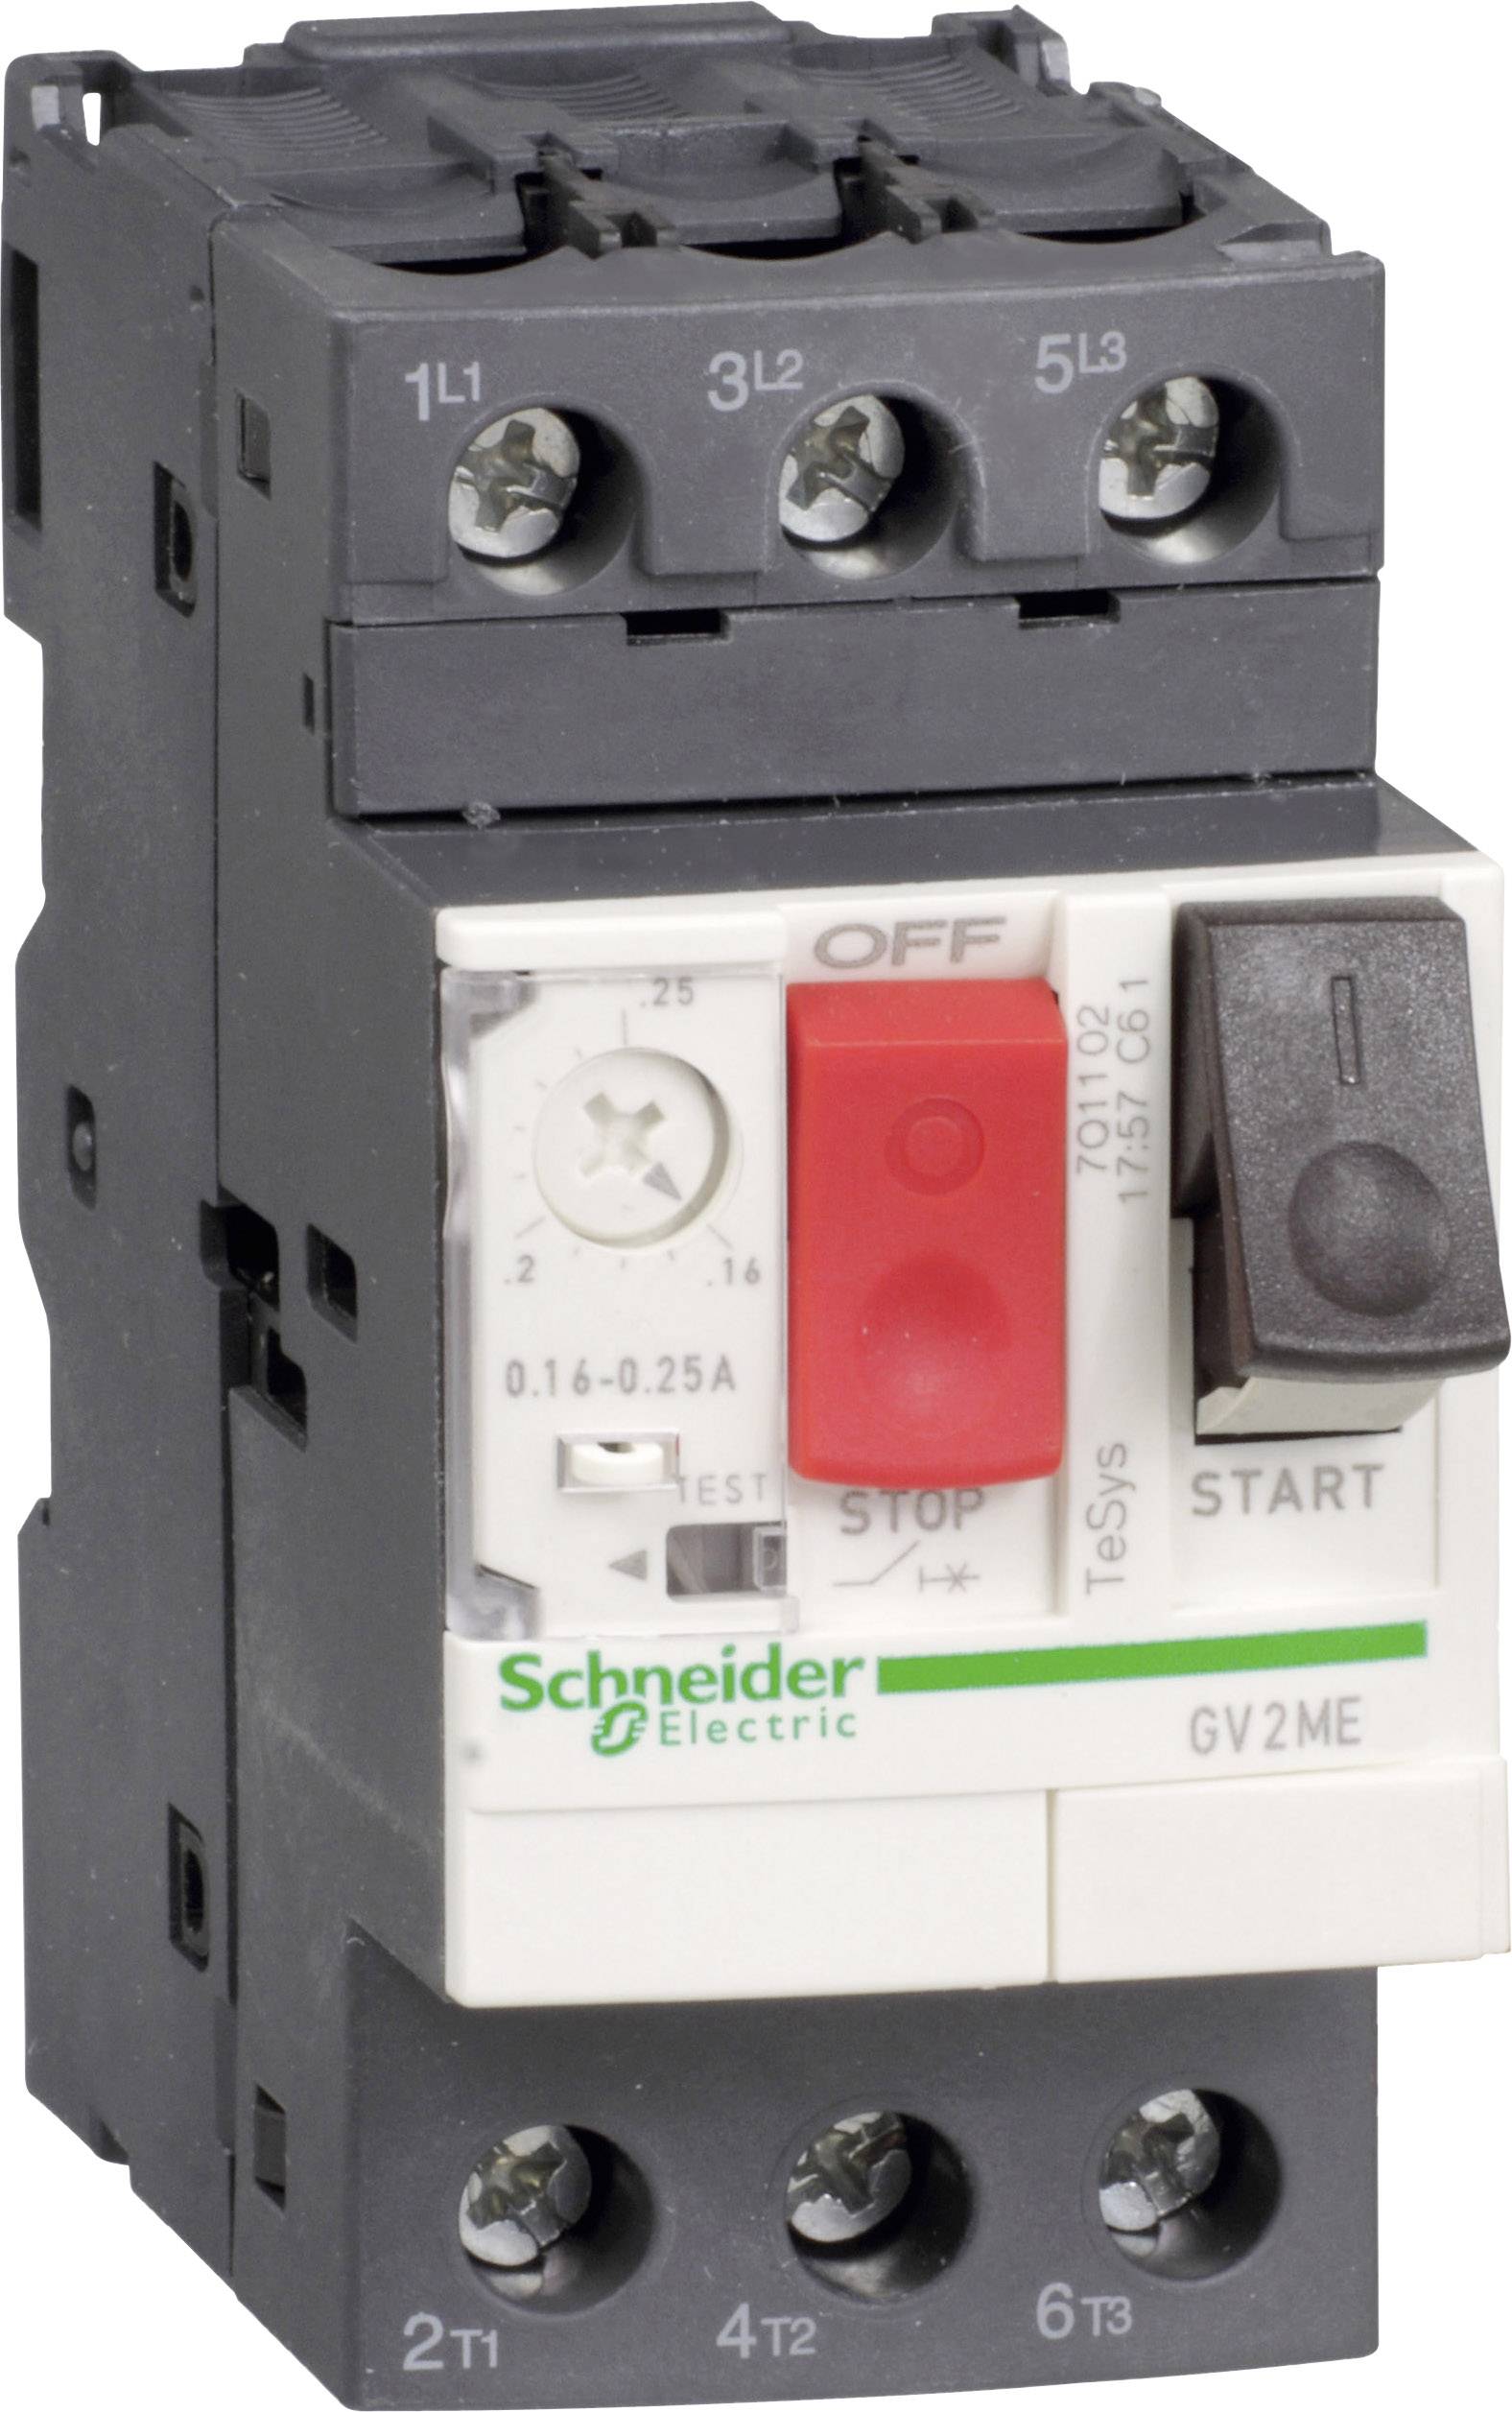 Schneider Telemecanique GV2ME08 Motor Circuit Breaker 